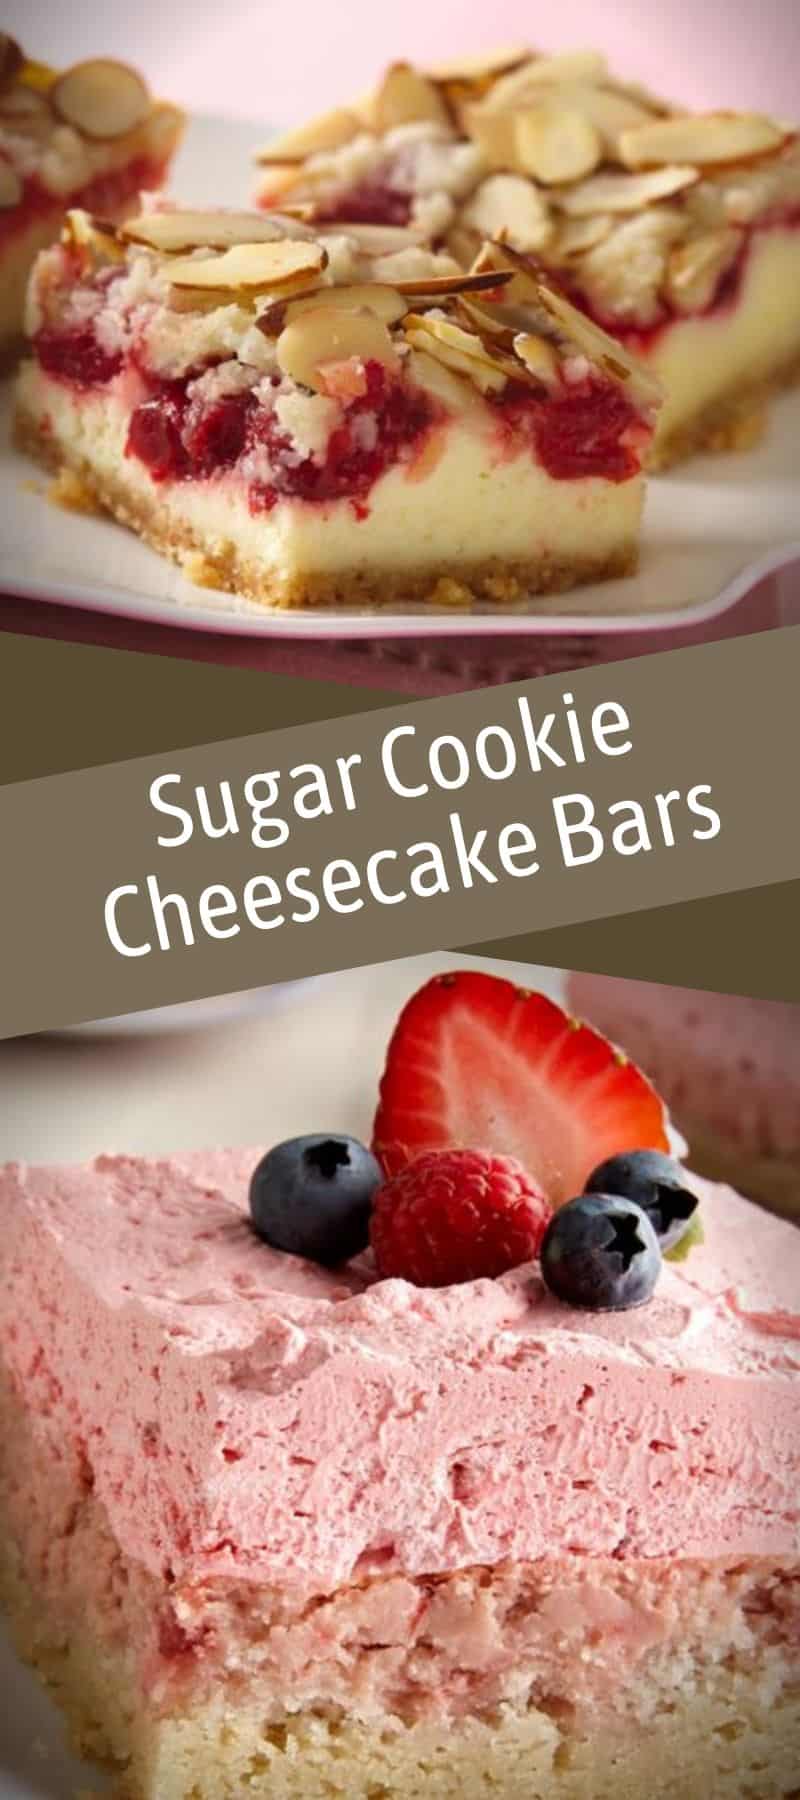 Sugar Cookie Cheesecake Bars Recipe 3